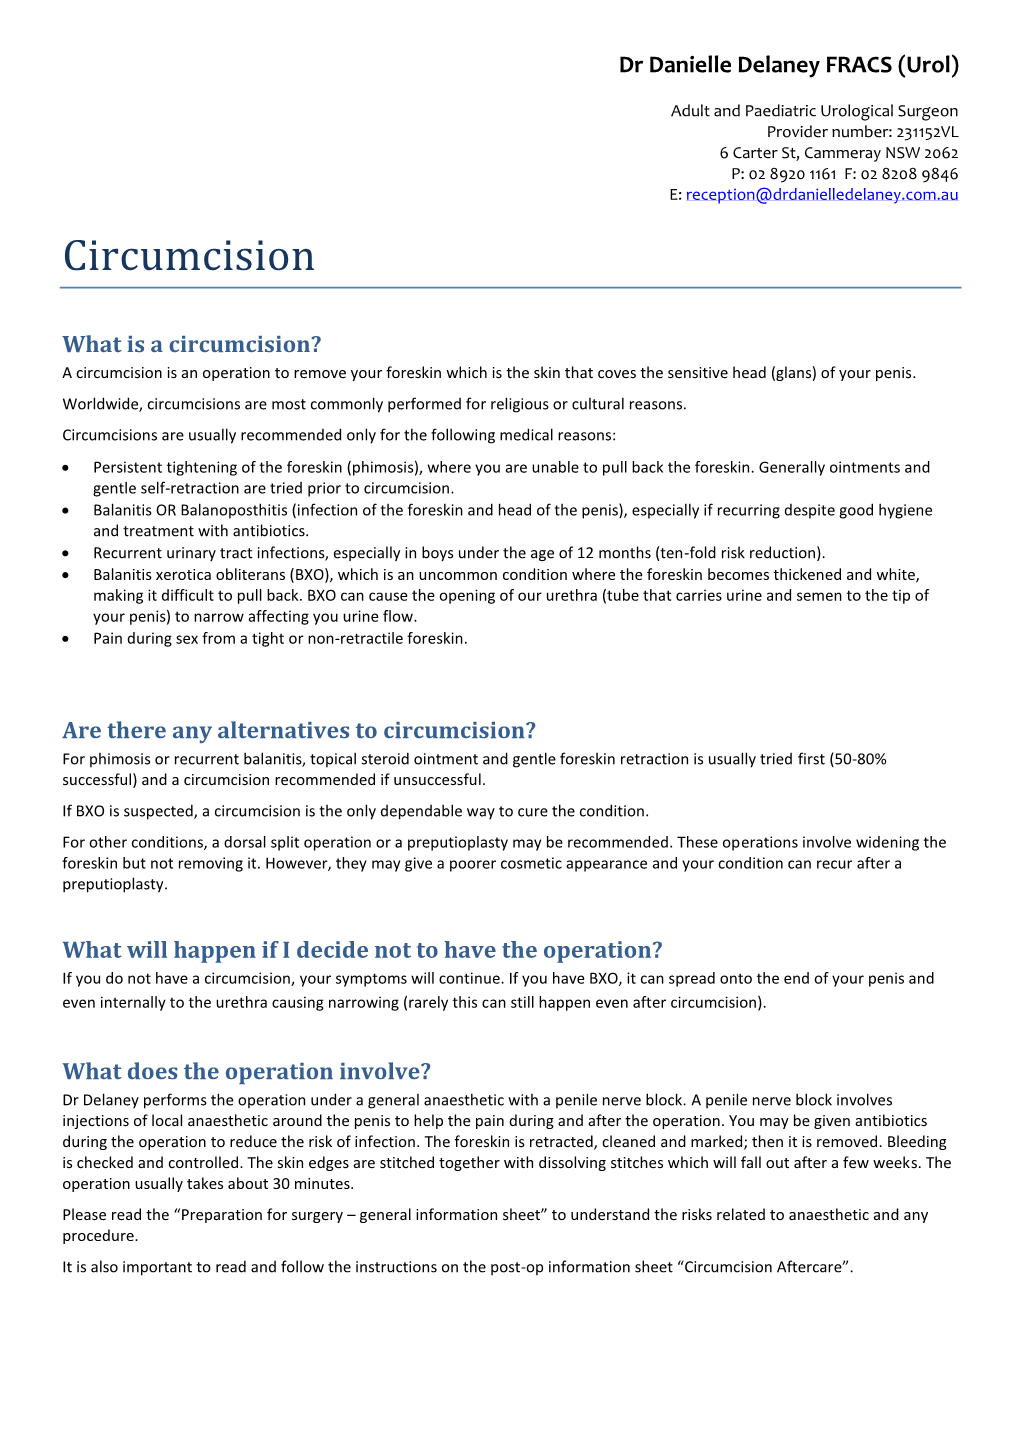 Circumcision Information Sheet